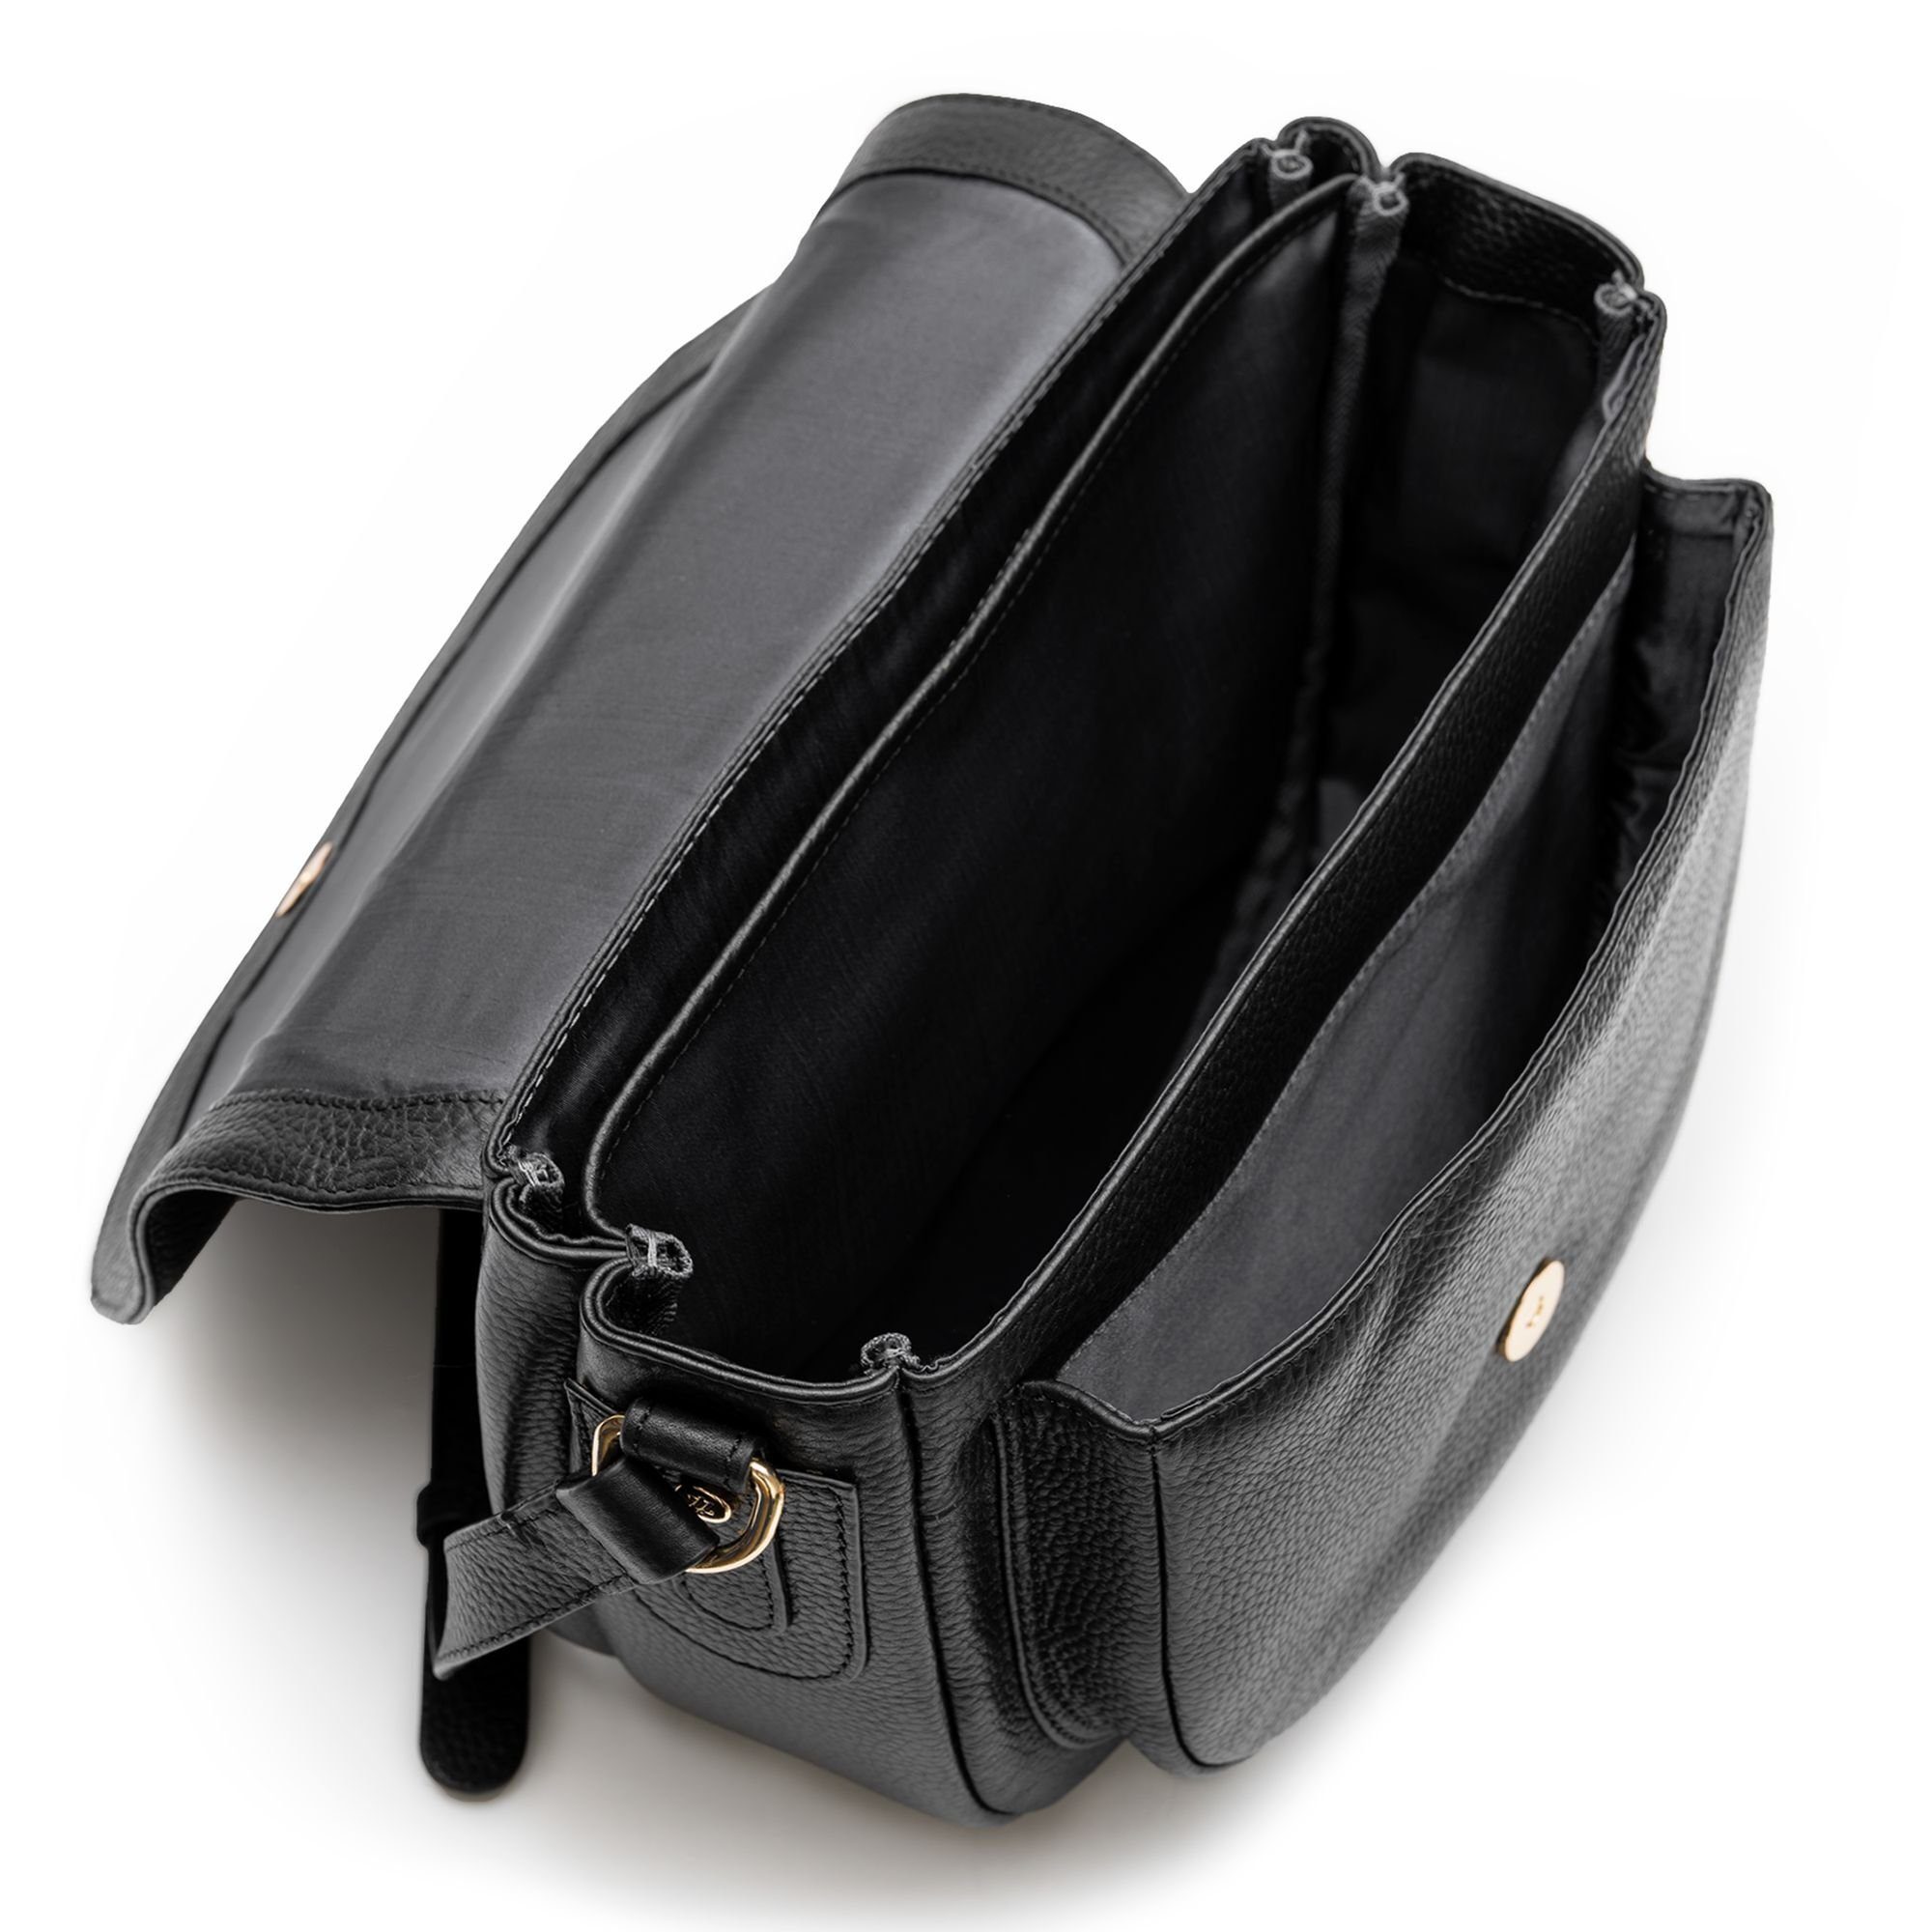 Leder Leather, black Umhängetasche Bologna Lazarotti